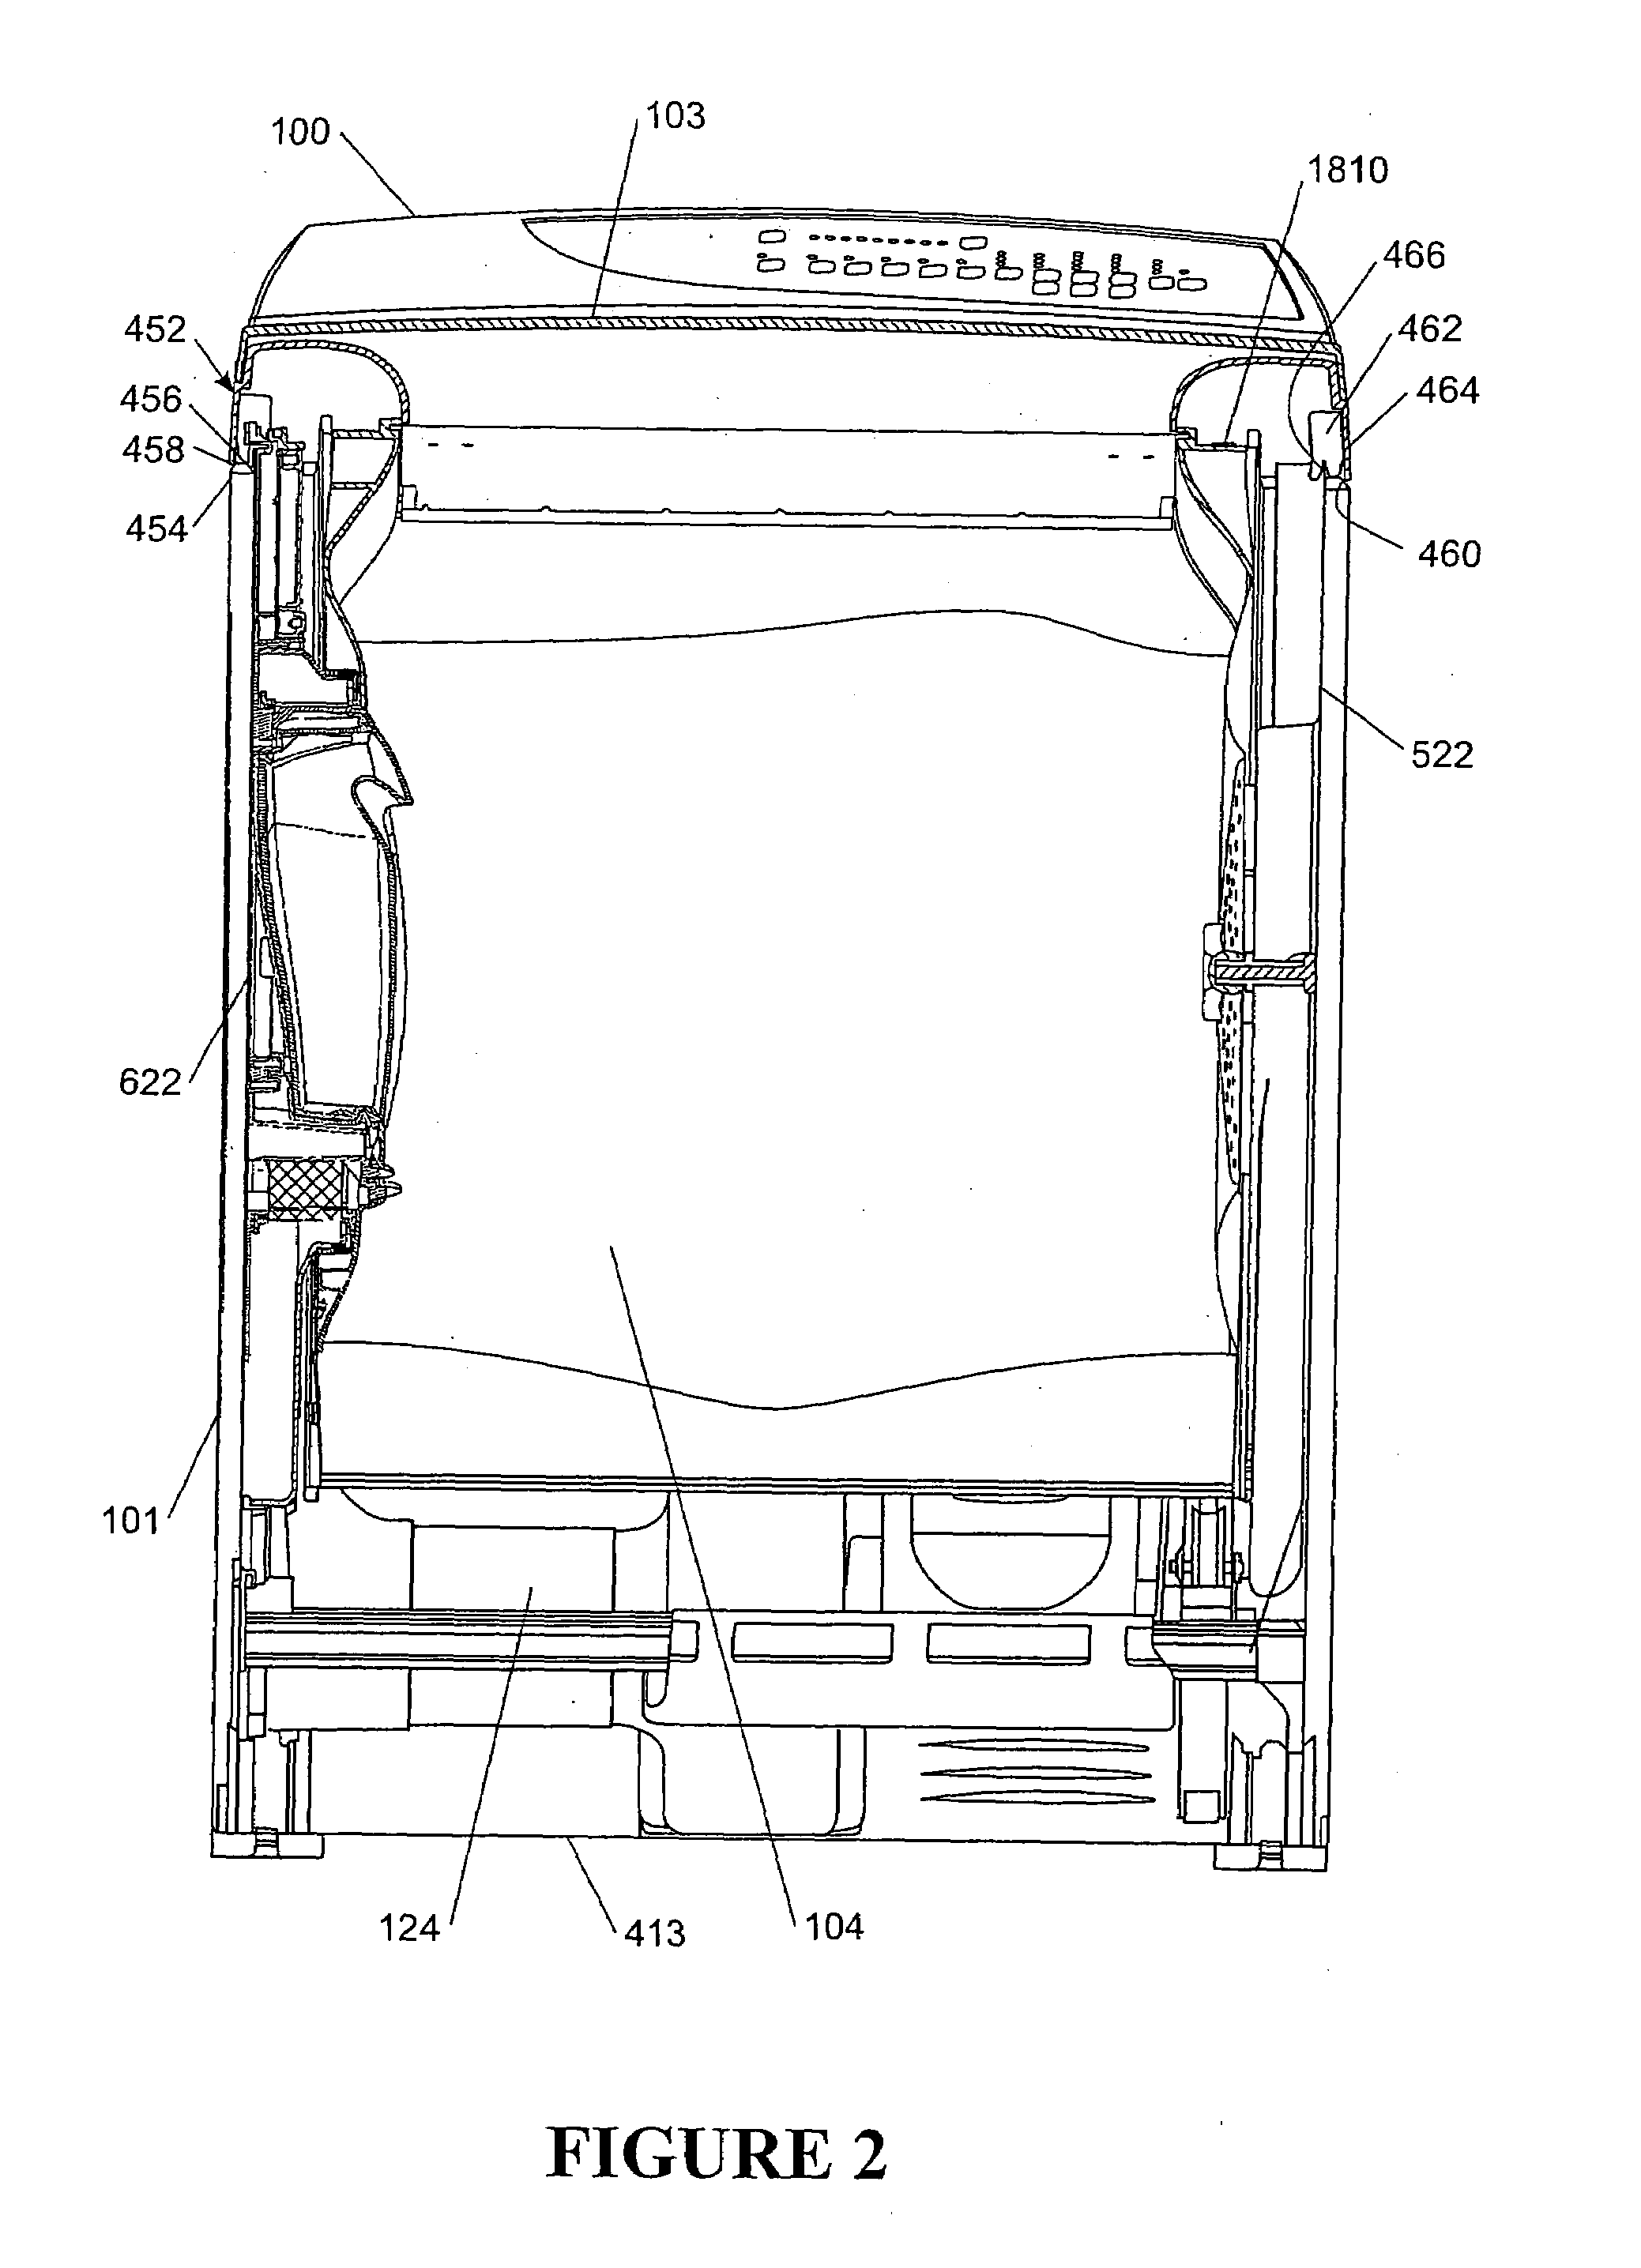 Self-levelling foot arrangement for an appliance